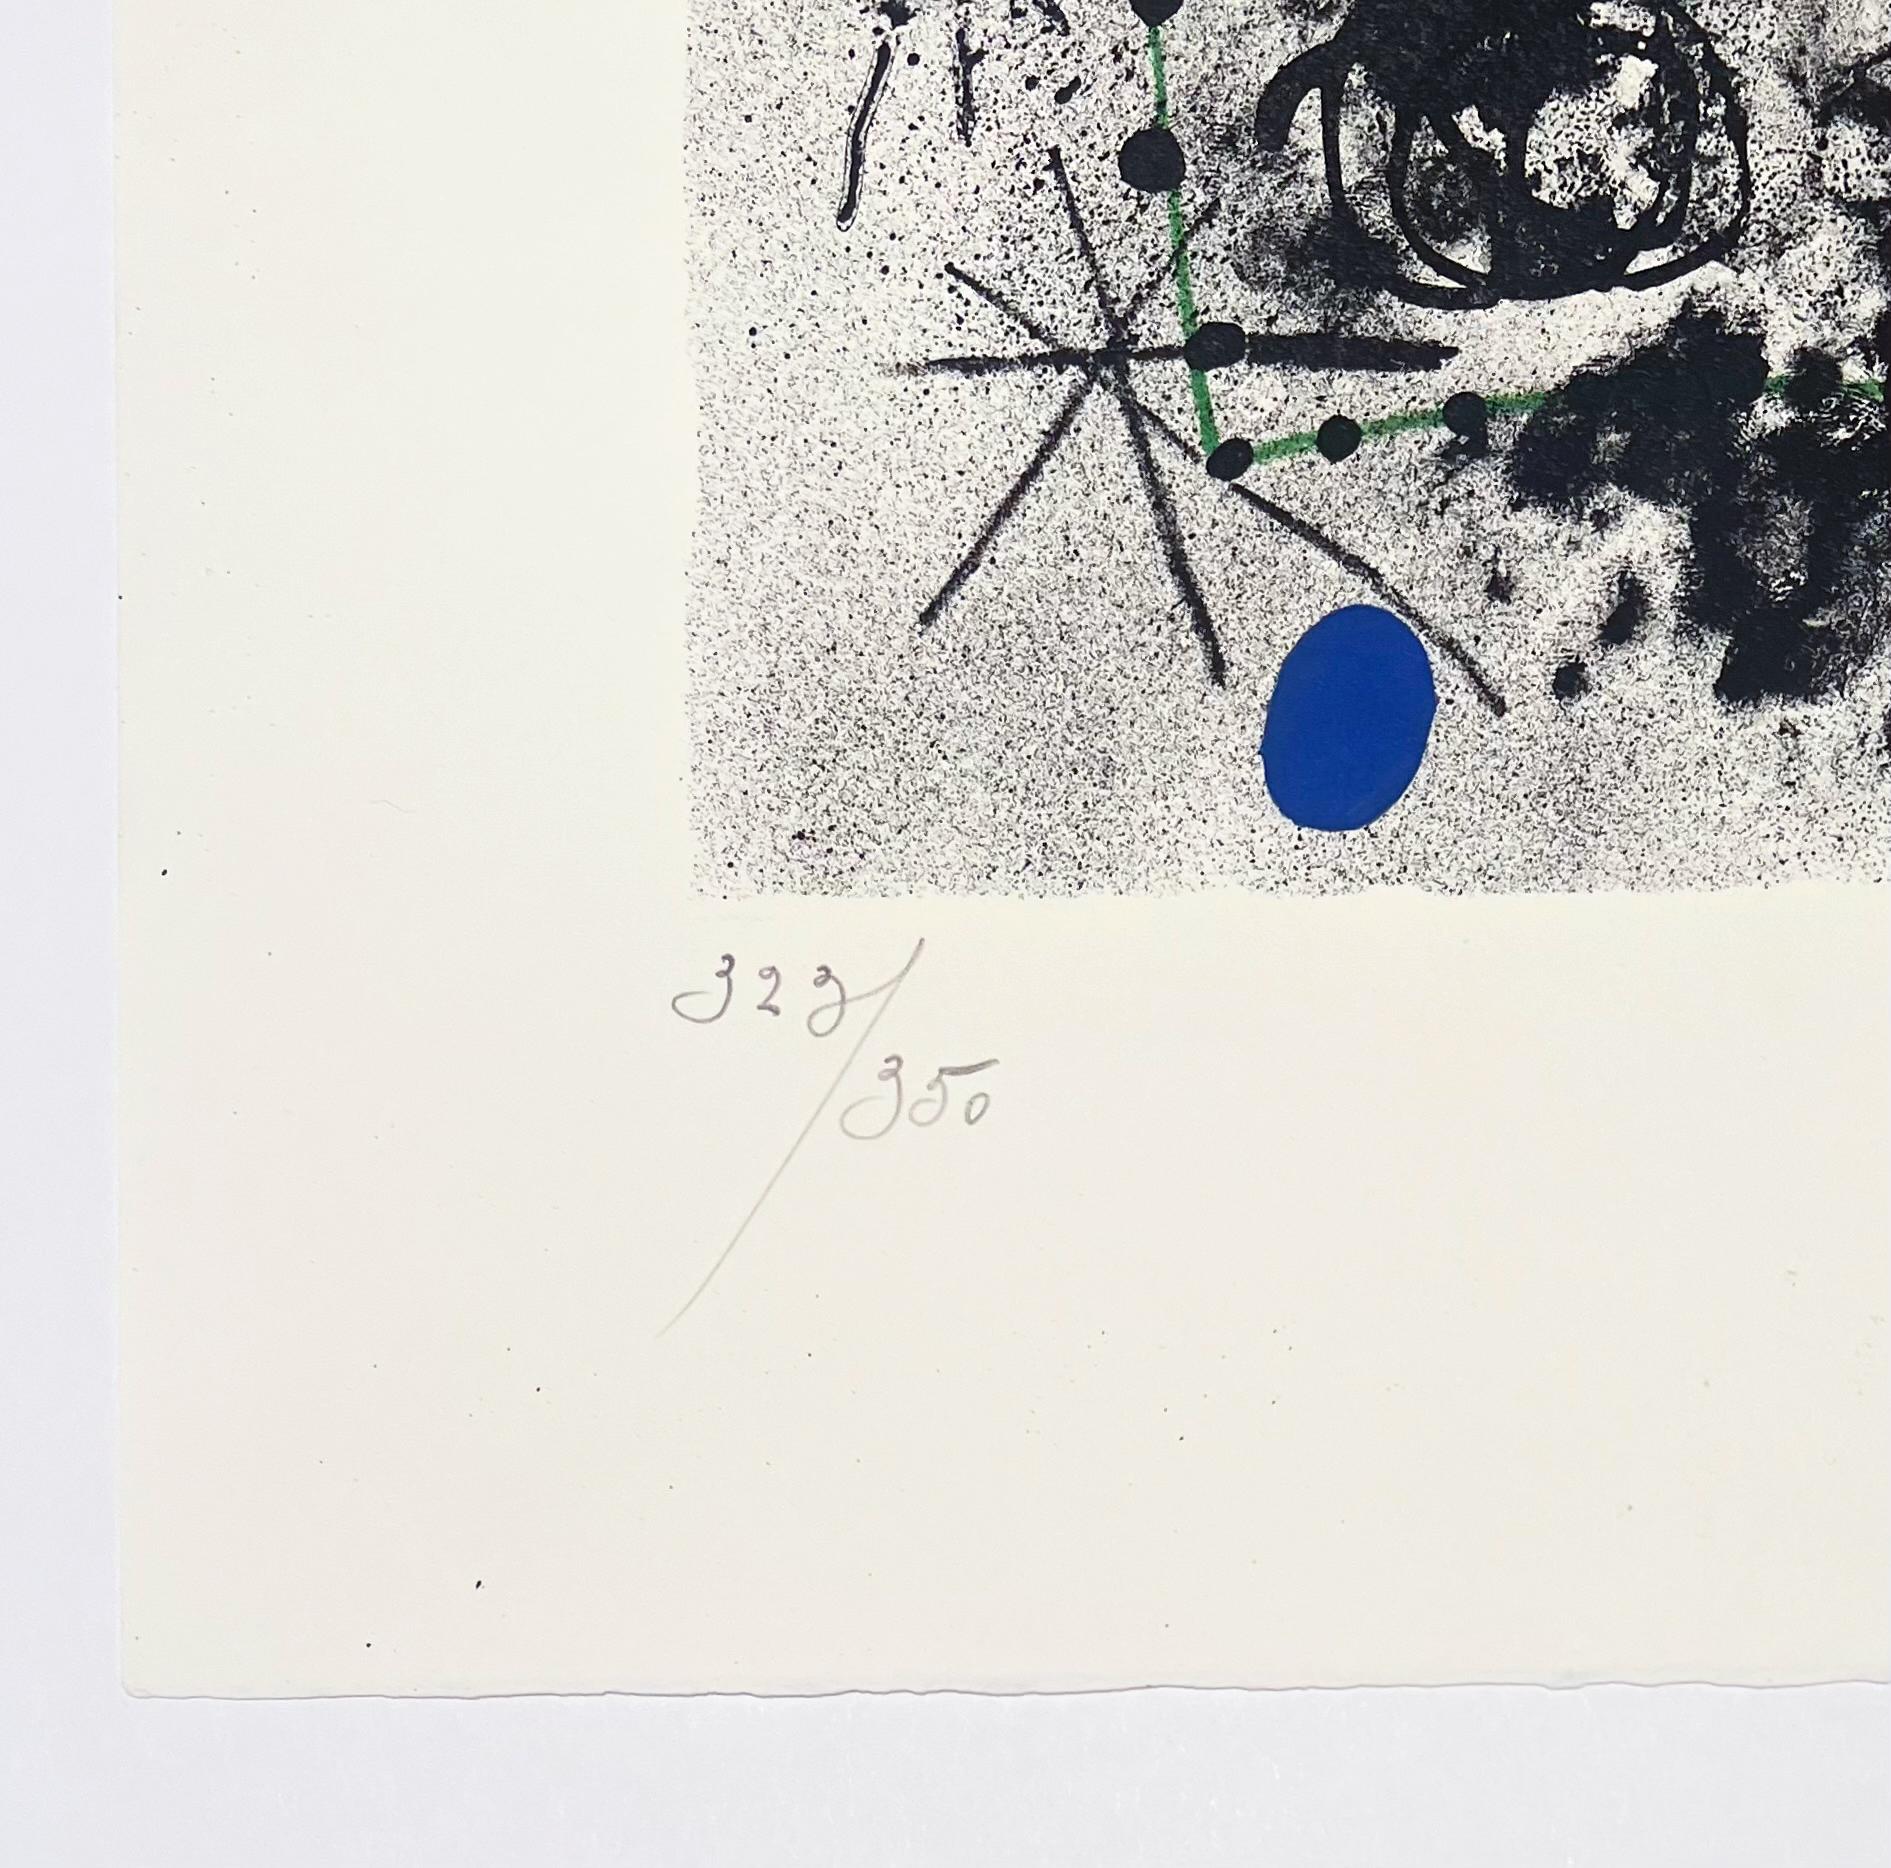 Artist: Joan Miro
Title: Constellations, Lithograph II
Portfolio: Constellations
Medium: Lithograph
Year: 1959
Edition: 323/350
Frame Size: 23 1/2